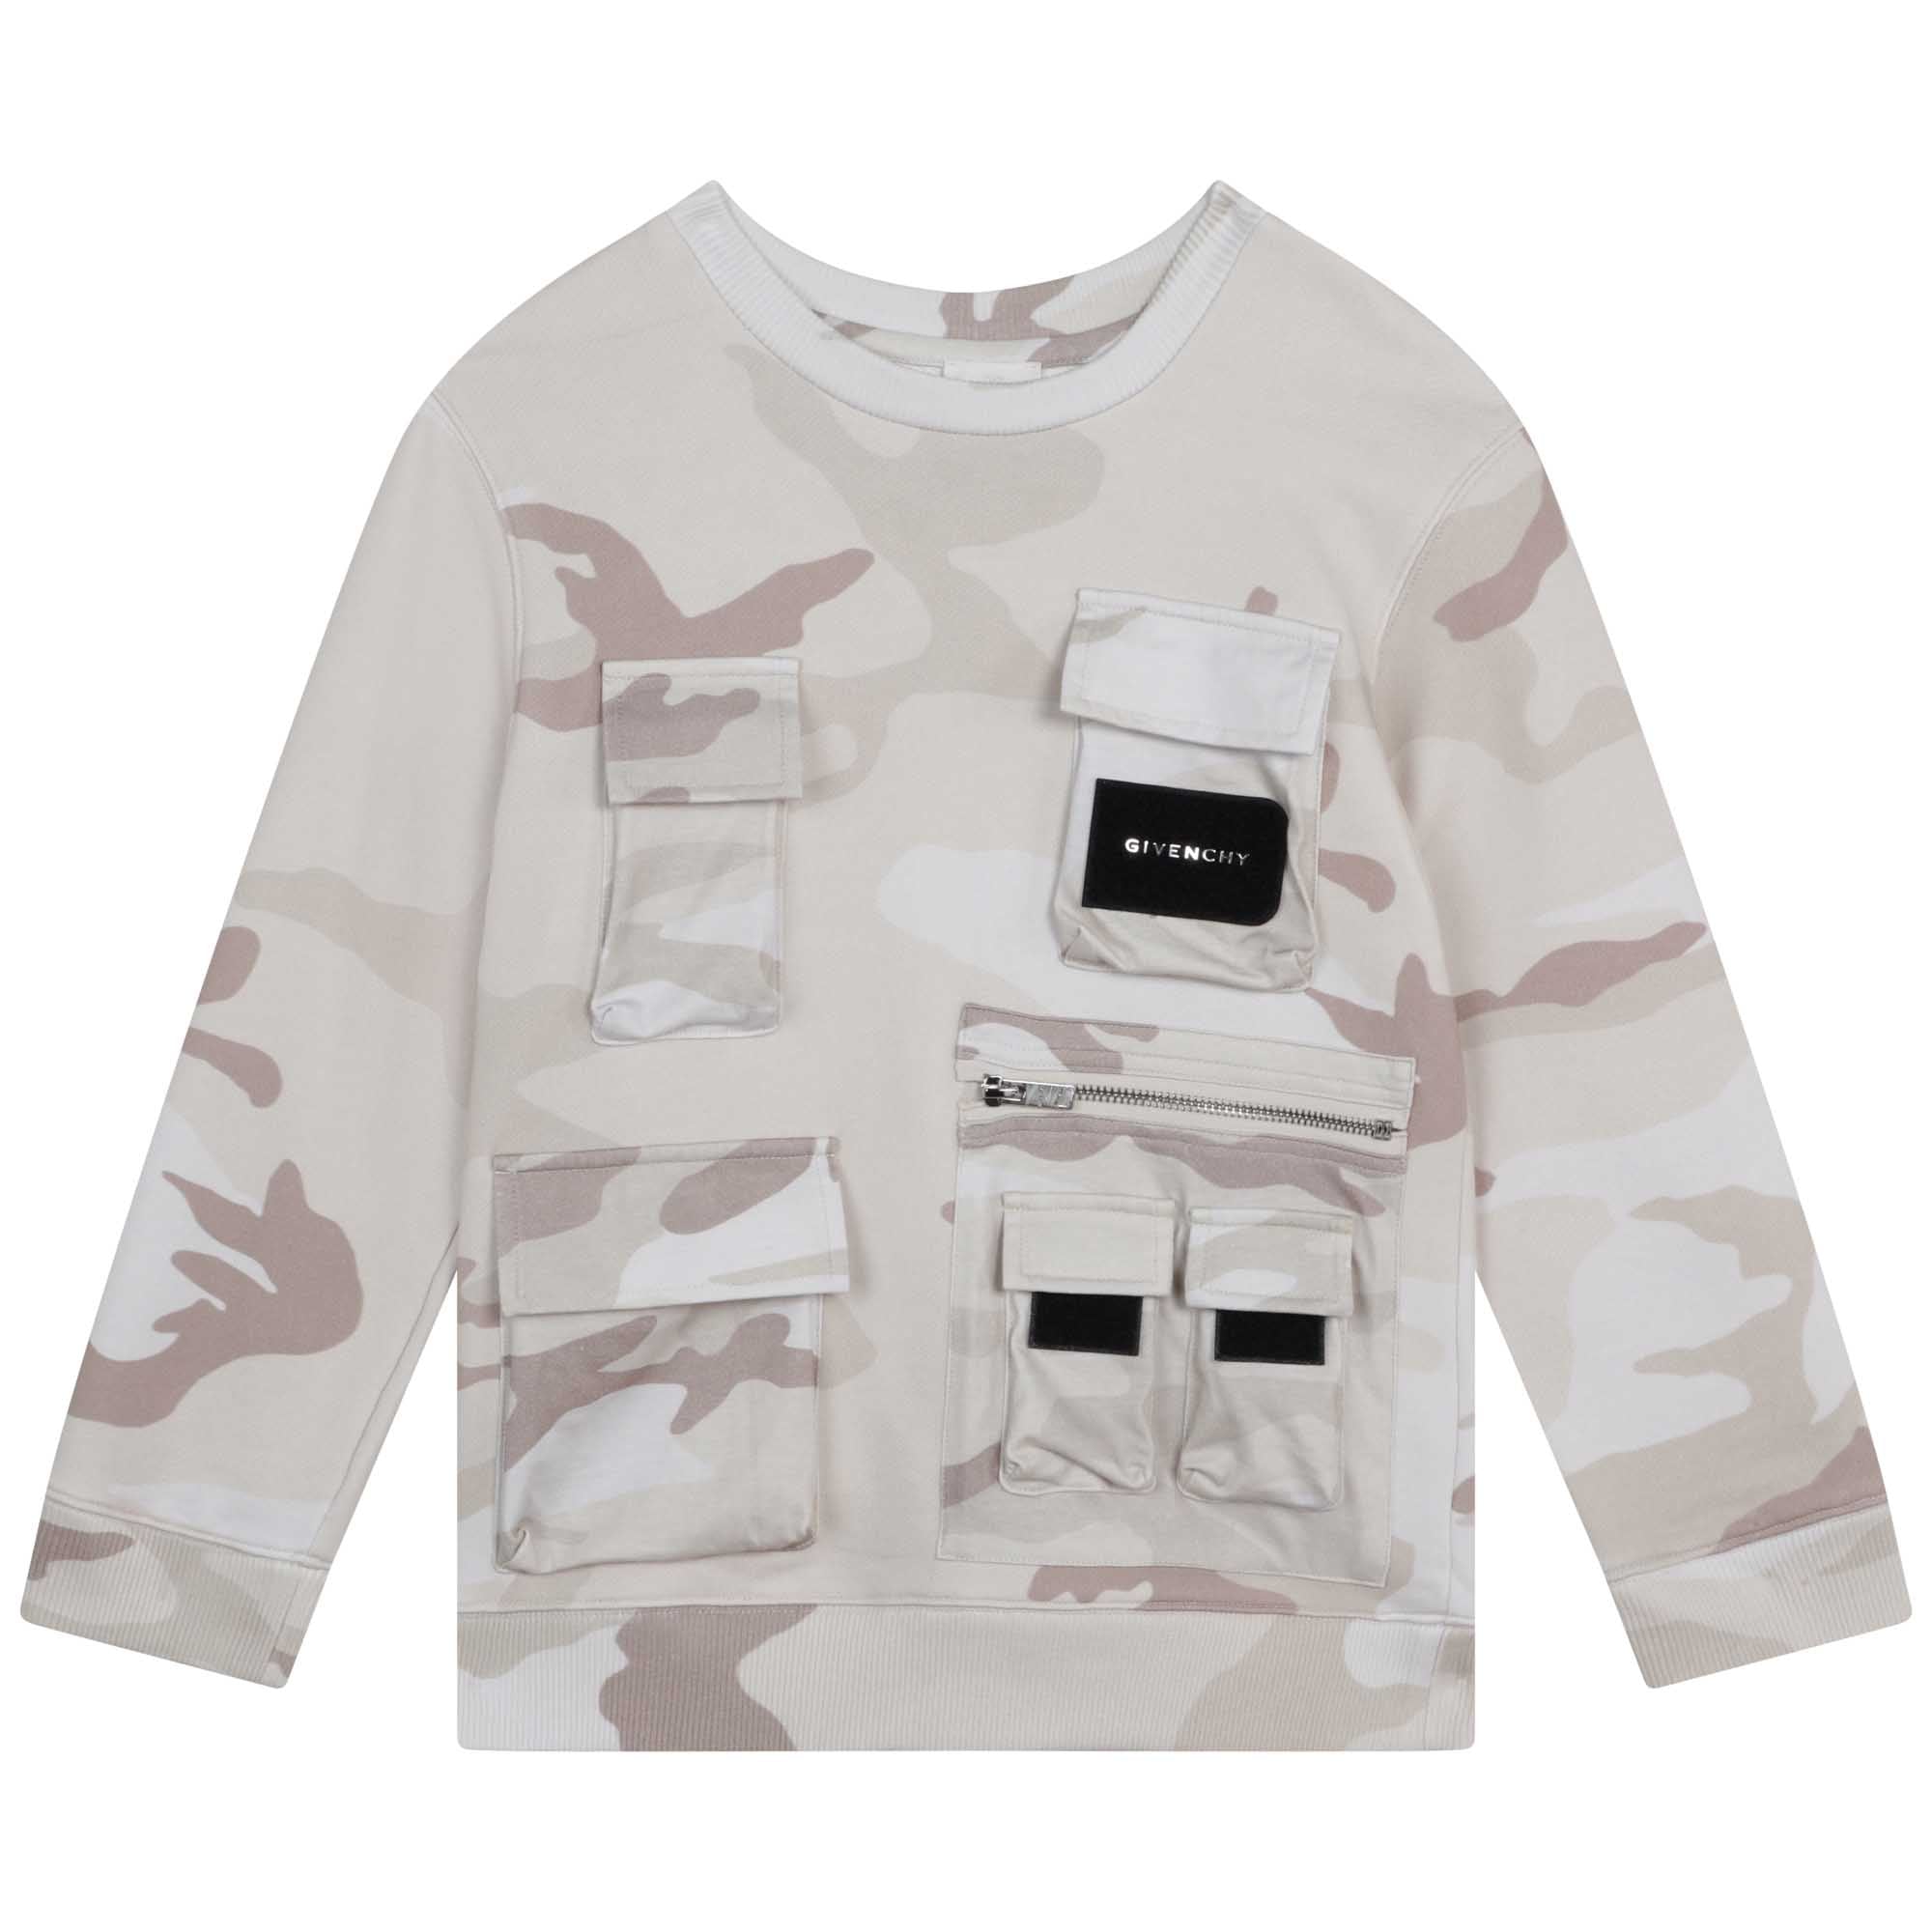 Givenchy Camouflage Sweatshirt